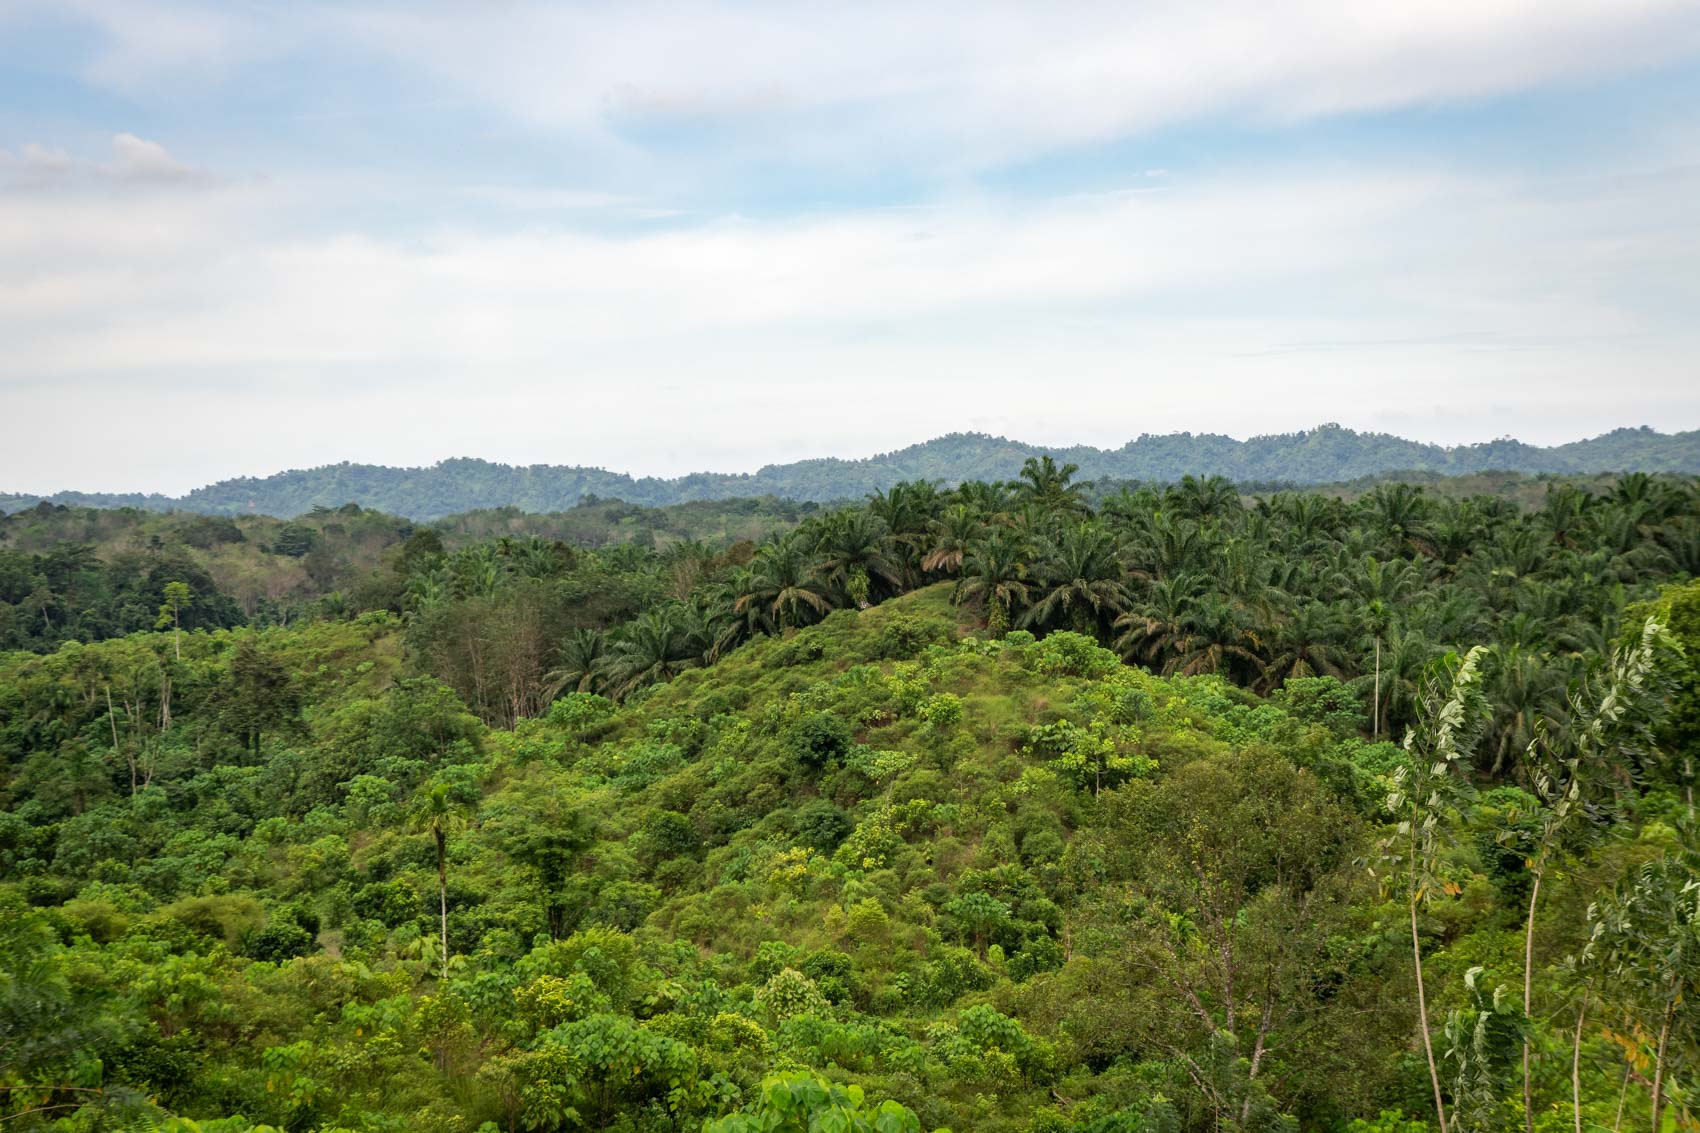 A young forest at the Orangutan Information Centre Cinta Raja restoration site